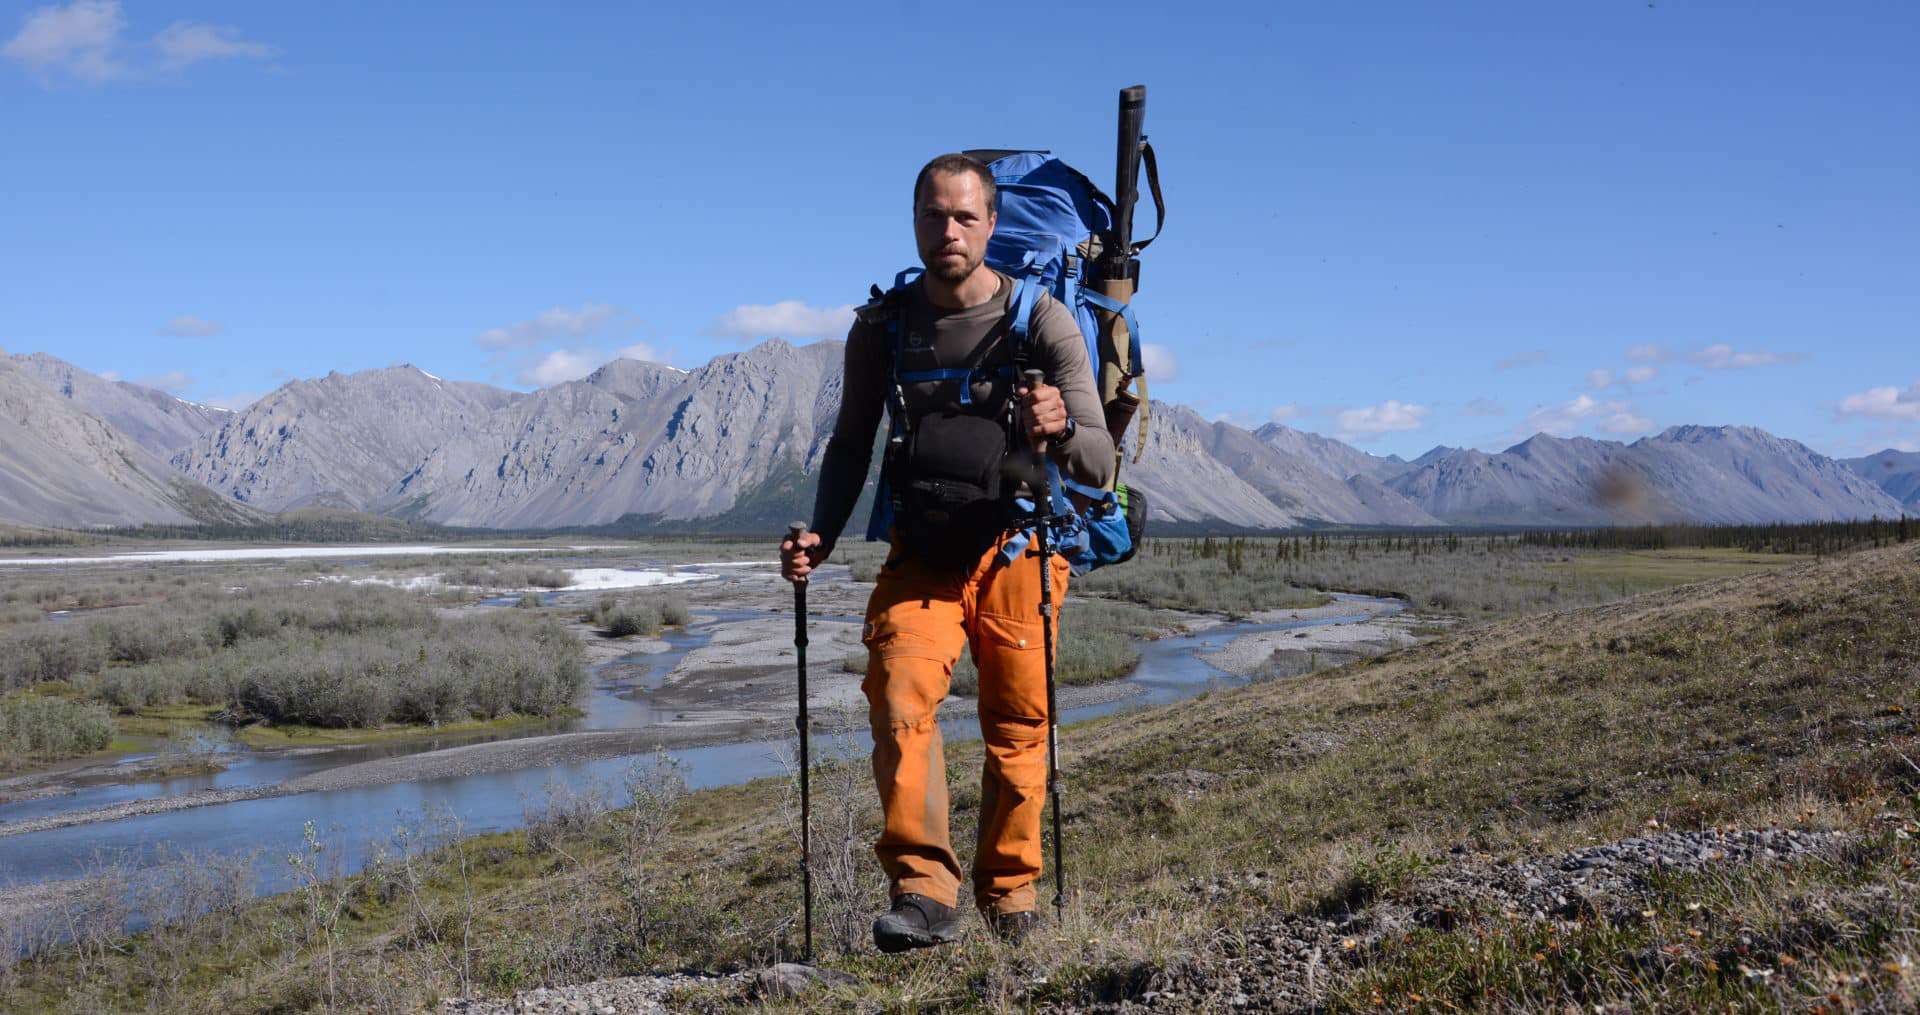 Erik B. Jørgensen vandre med stor rygsæk, gevær og vandrestav, i storslået langskab under "Alaska på tværs"